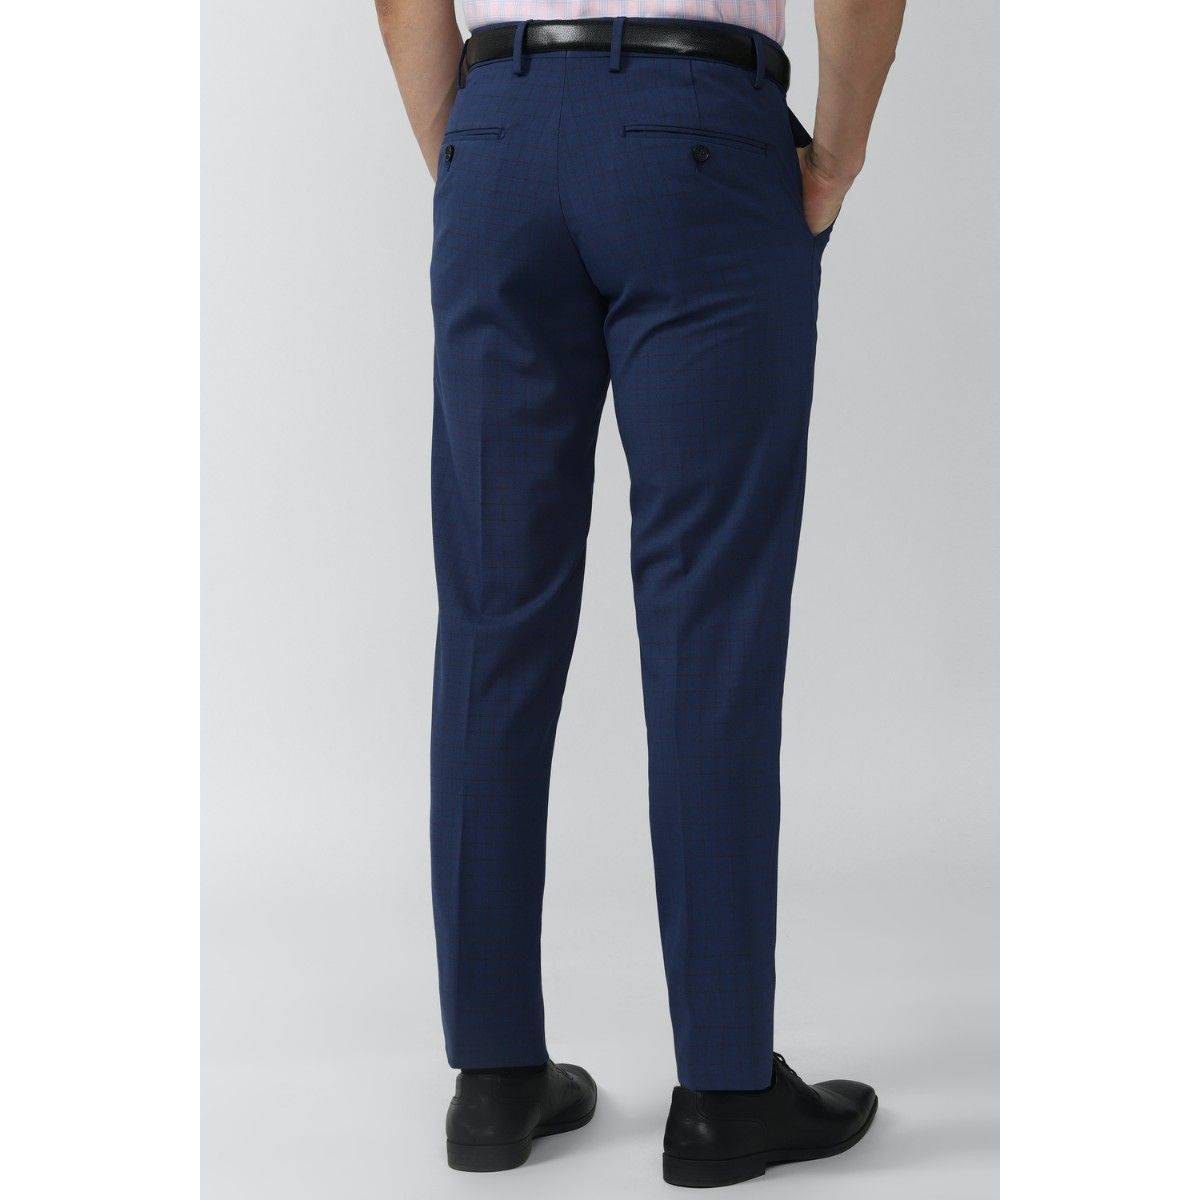 Buy Allen Solly Men Blue Slim Fit Textured Casual Trousers online